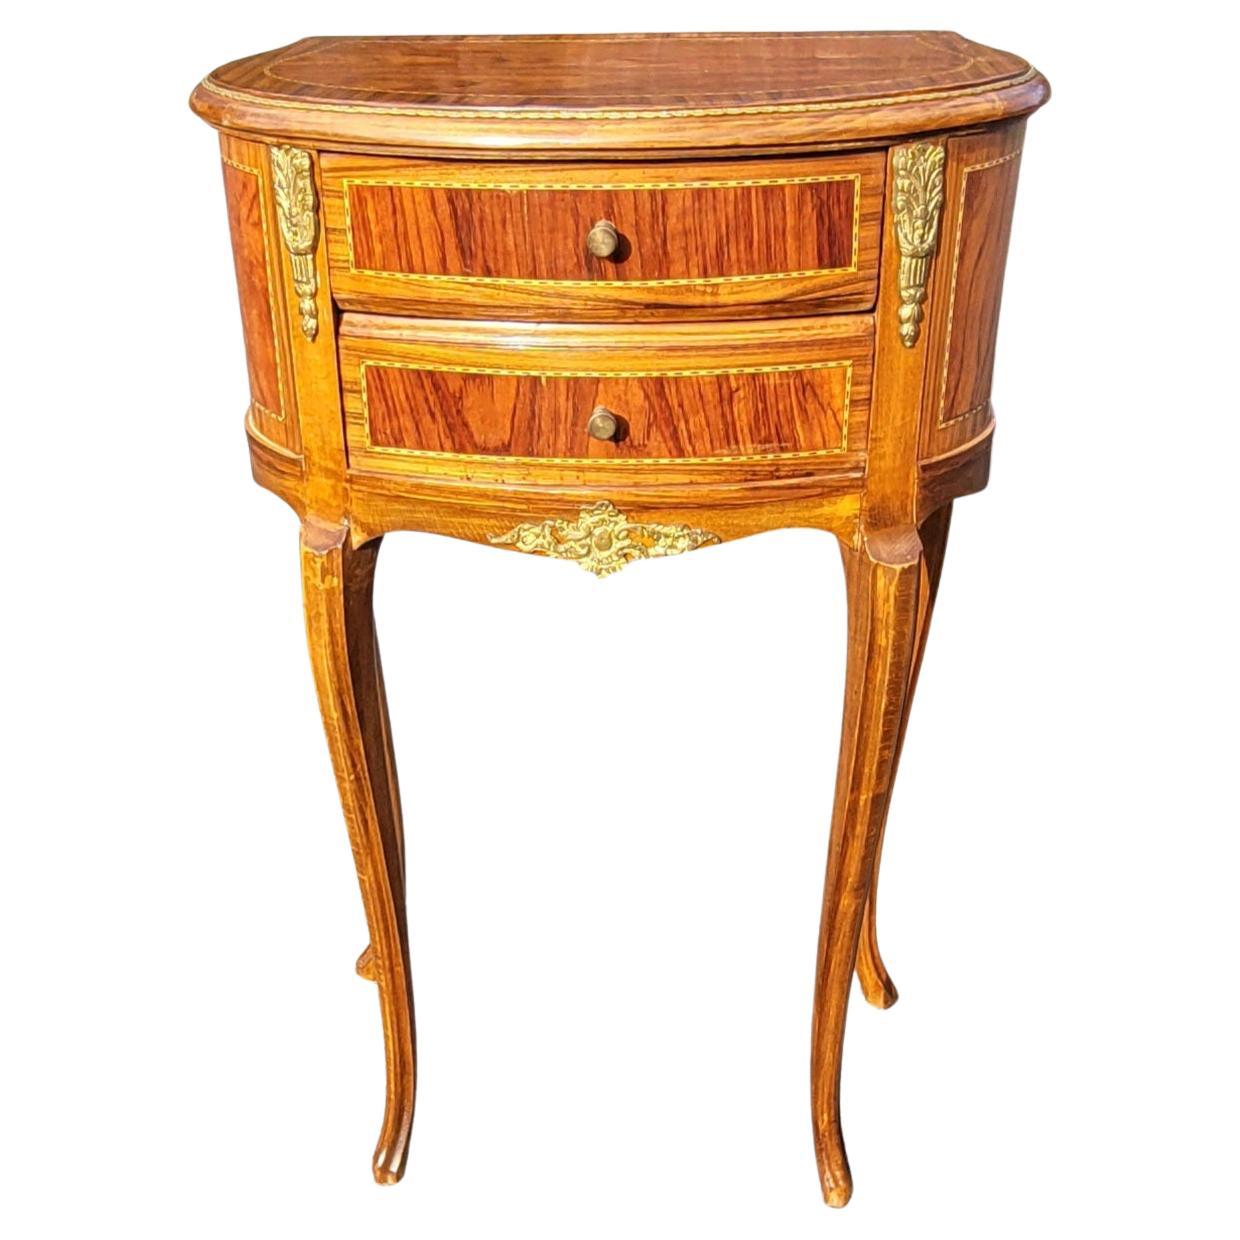 20th Century French Louis XV Walnut Kingwood Satinwood Inlaid Ormolu Side Table For Sale 1